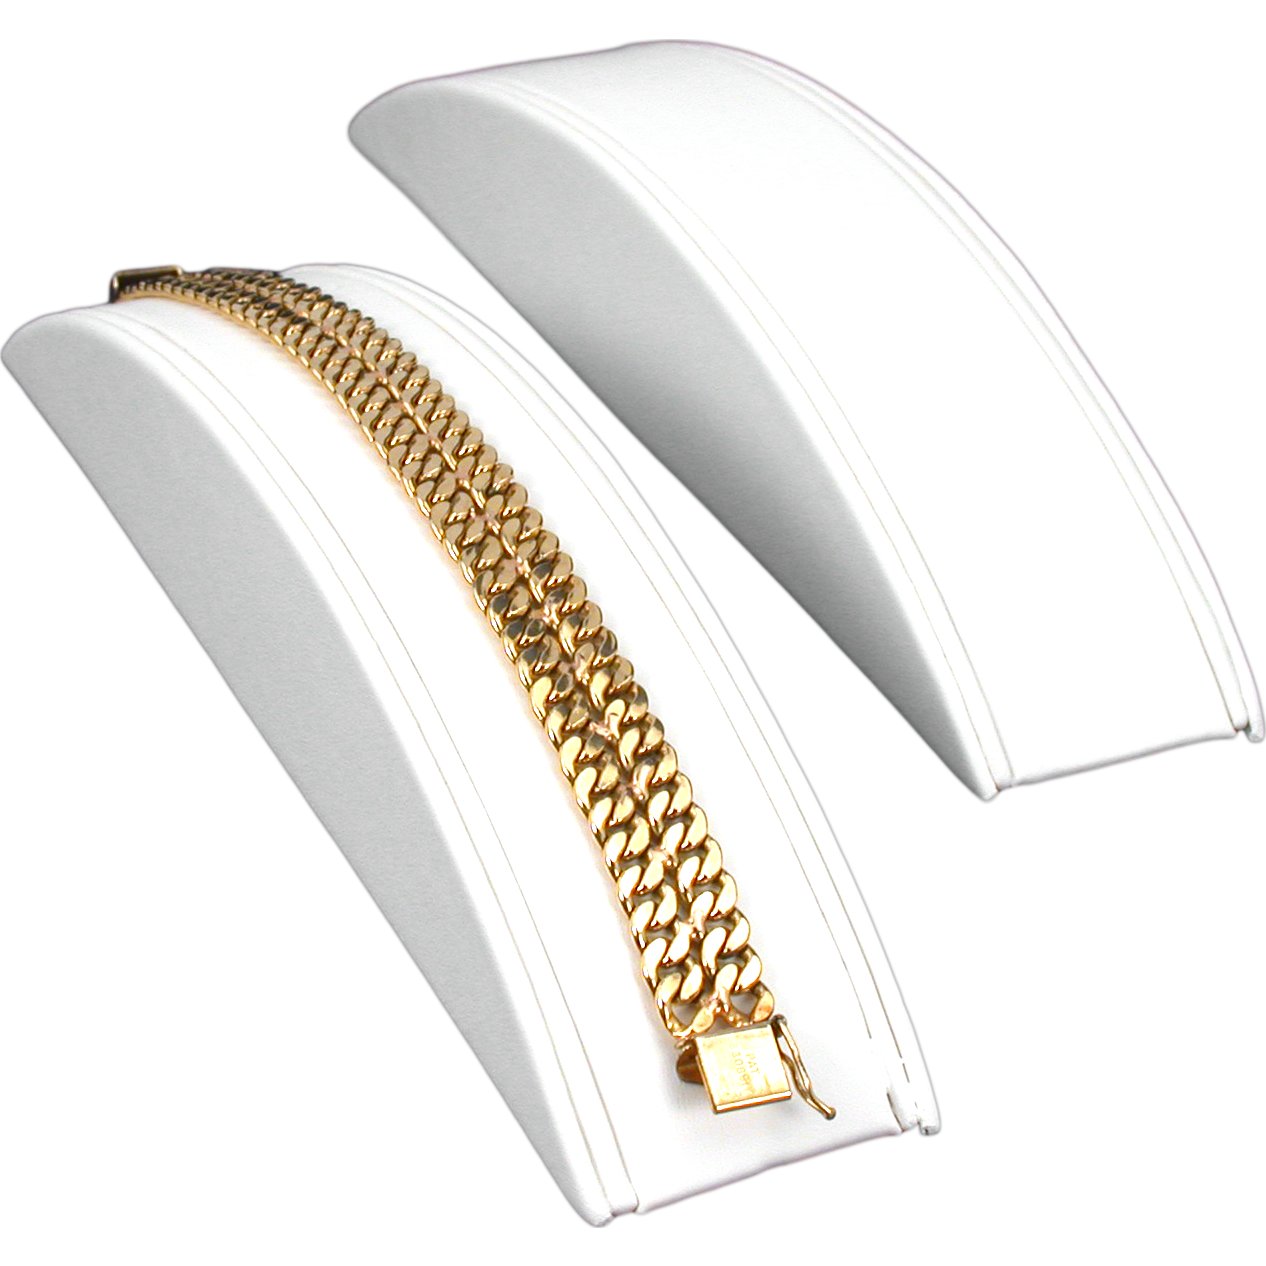 2 White Leather Bracelet Ramp Displays Jewelry Showcase